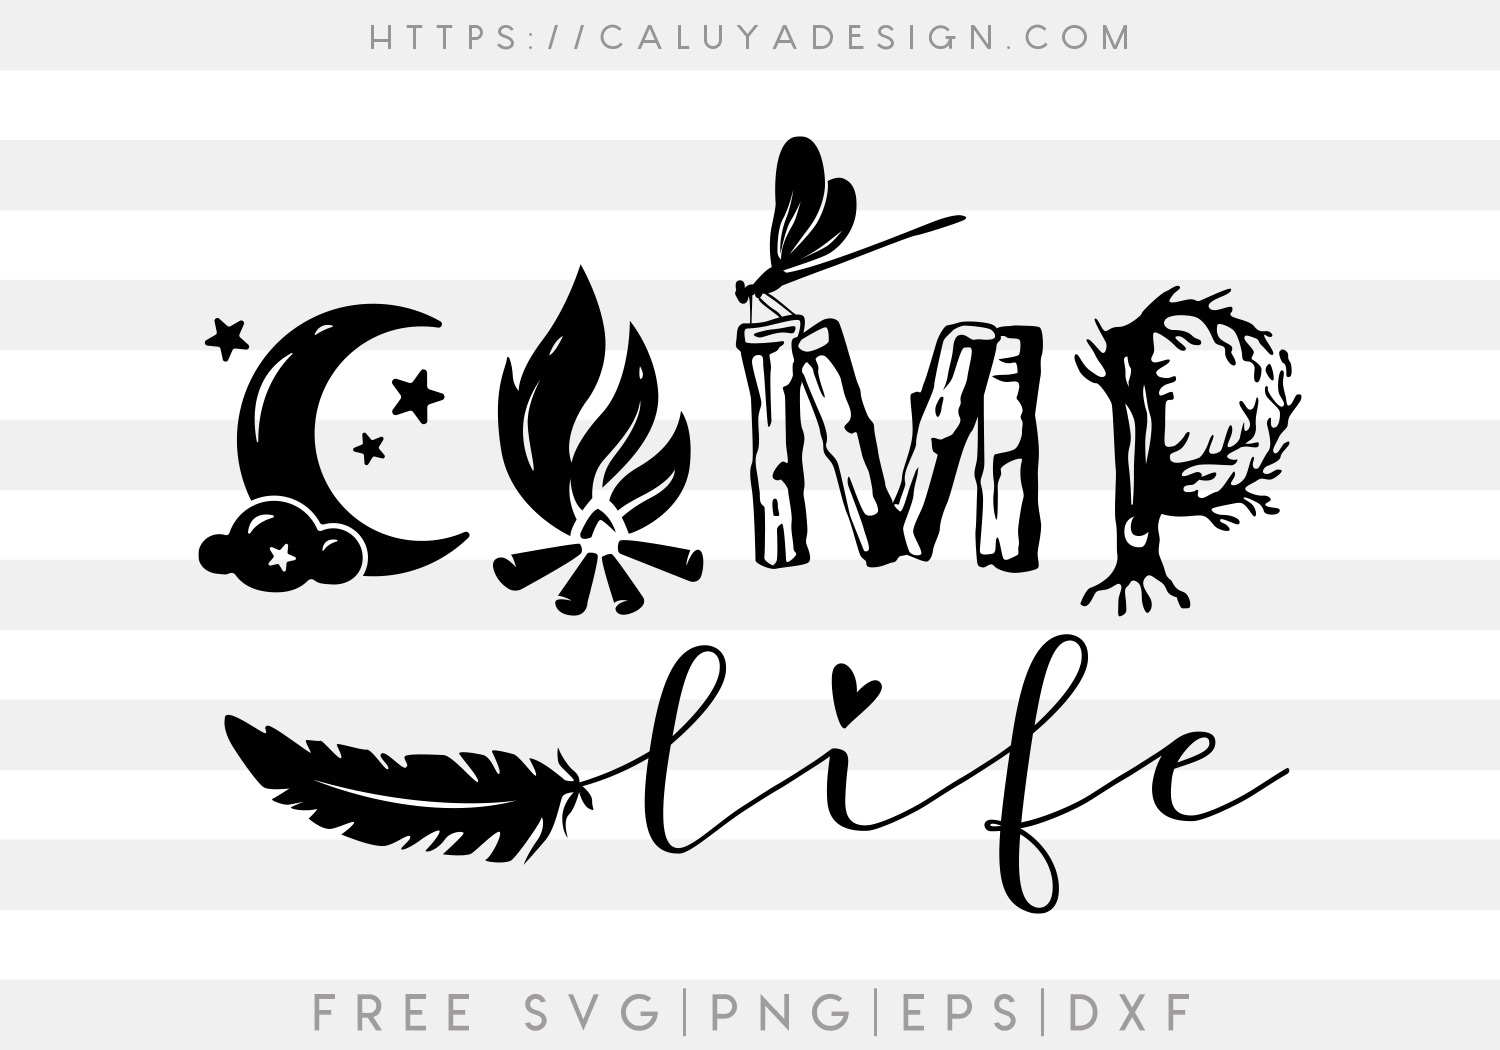 Free Camp Life SVG Cut File